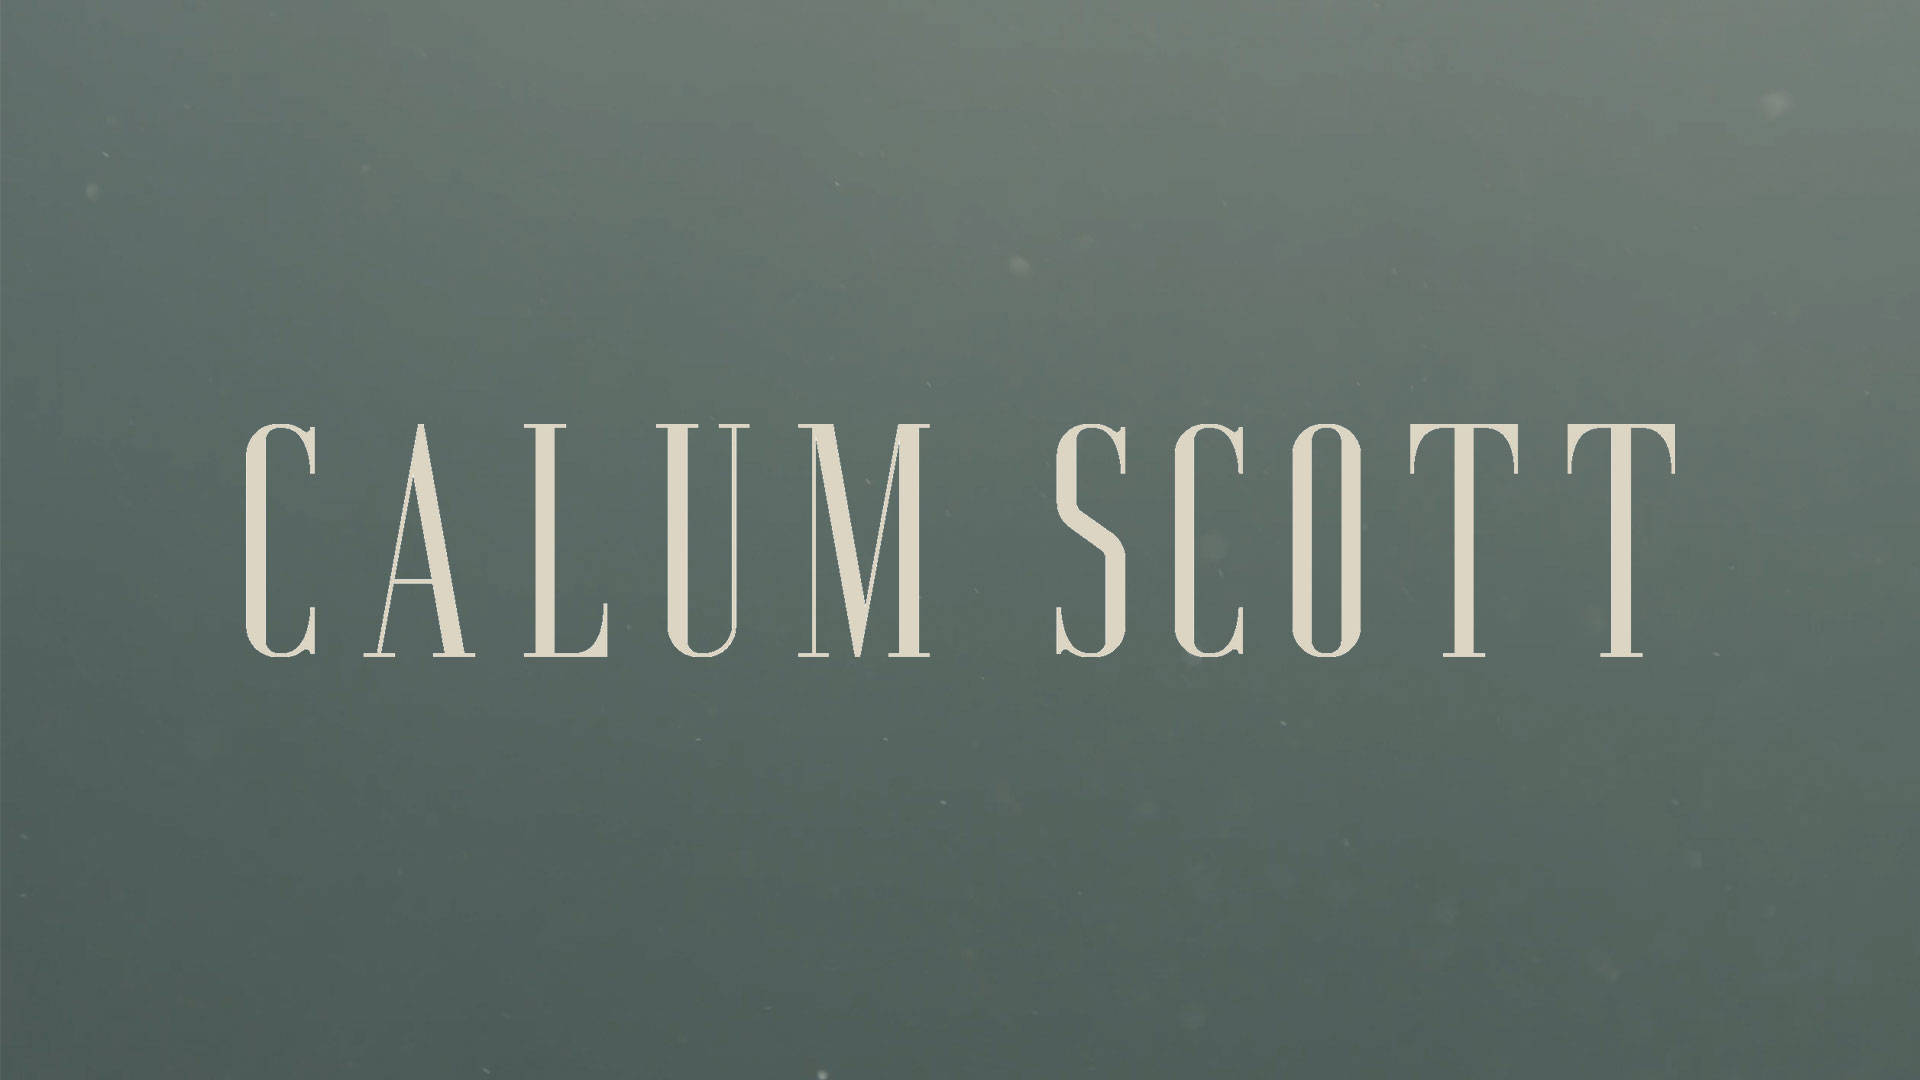 Calum Scott Name Banner Background